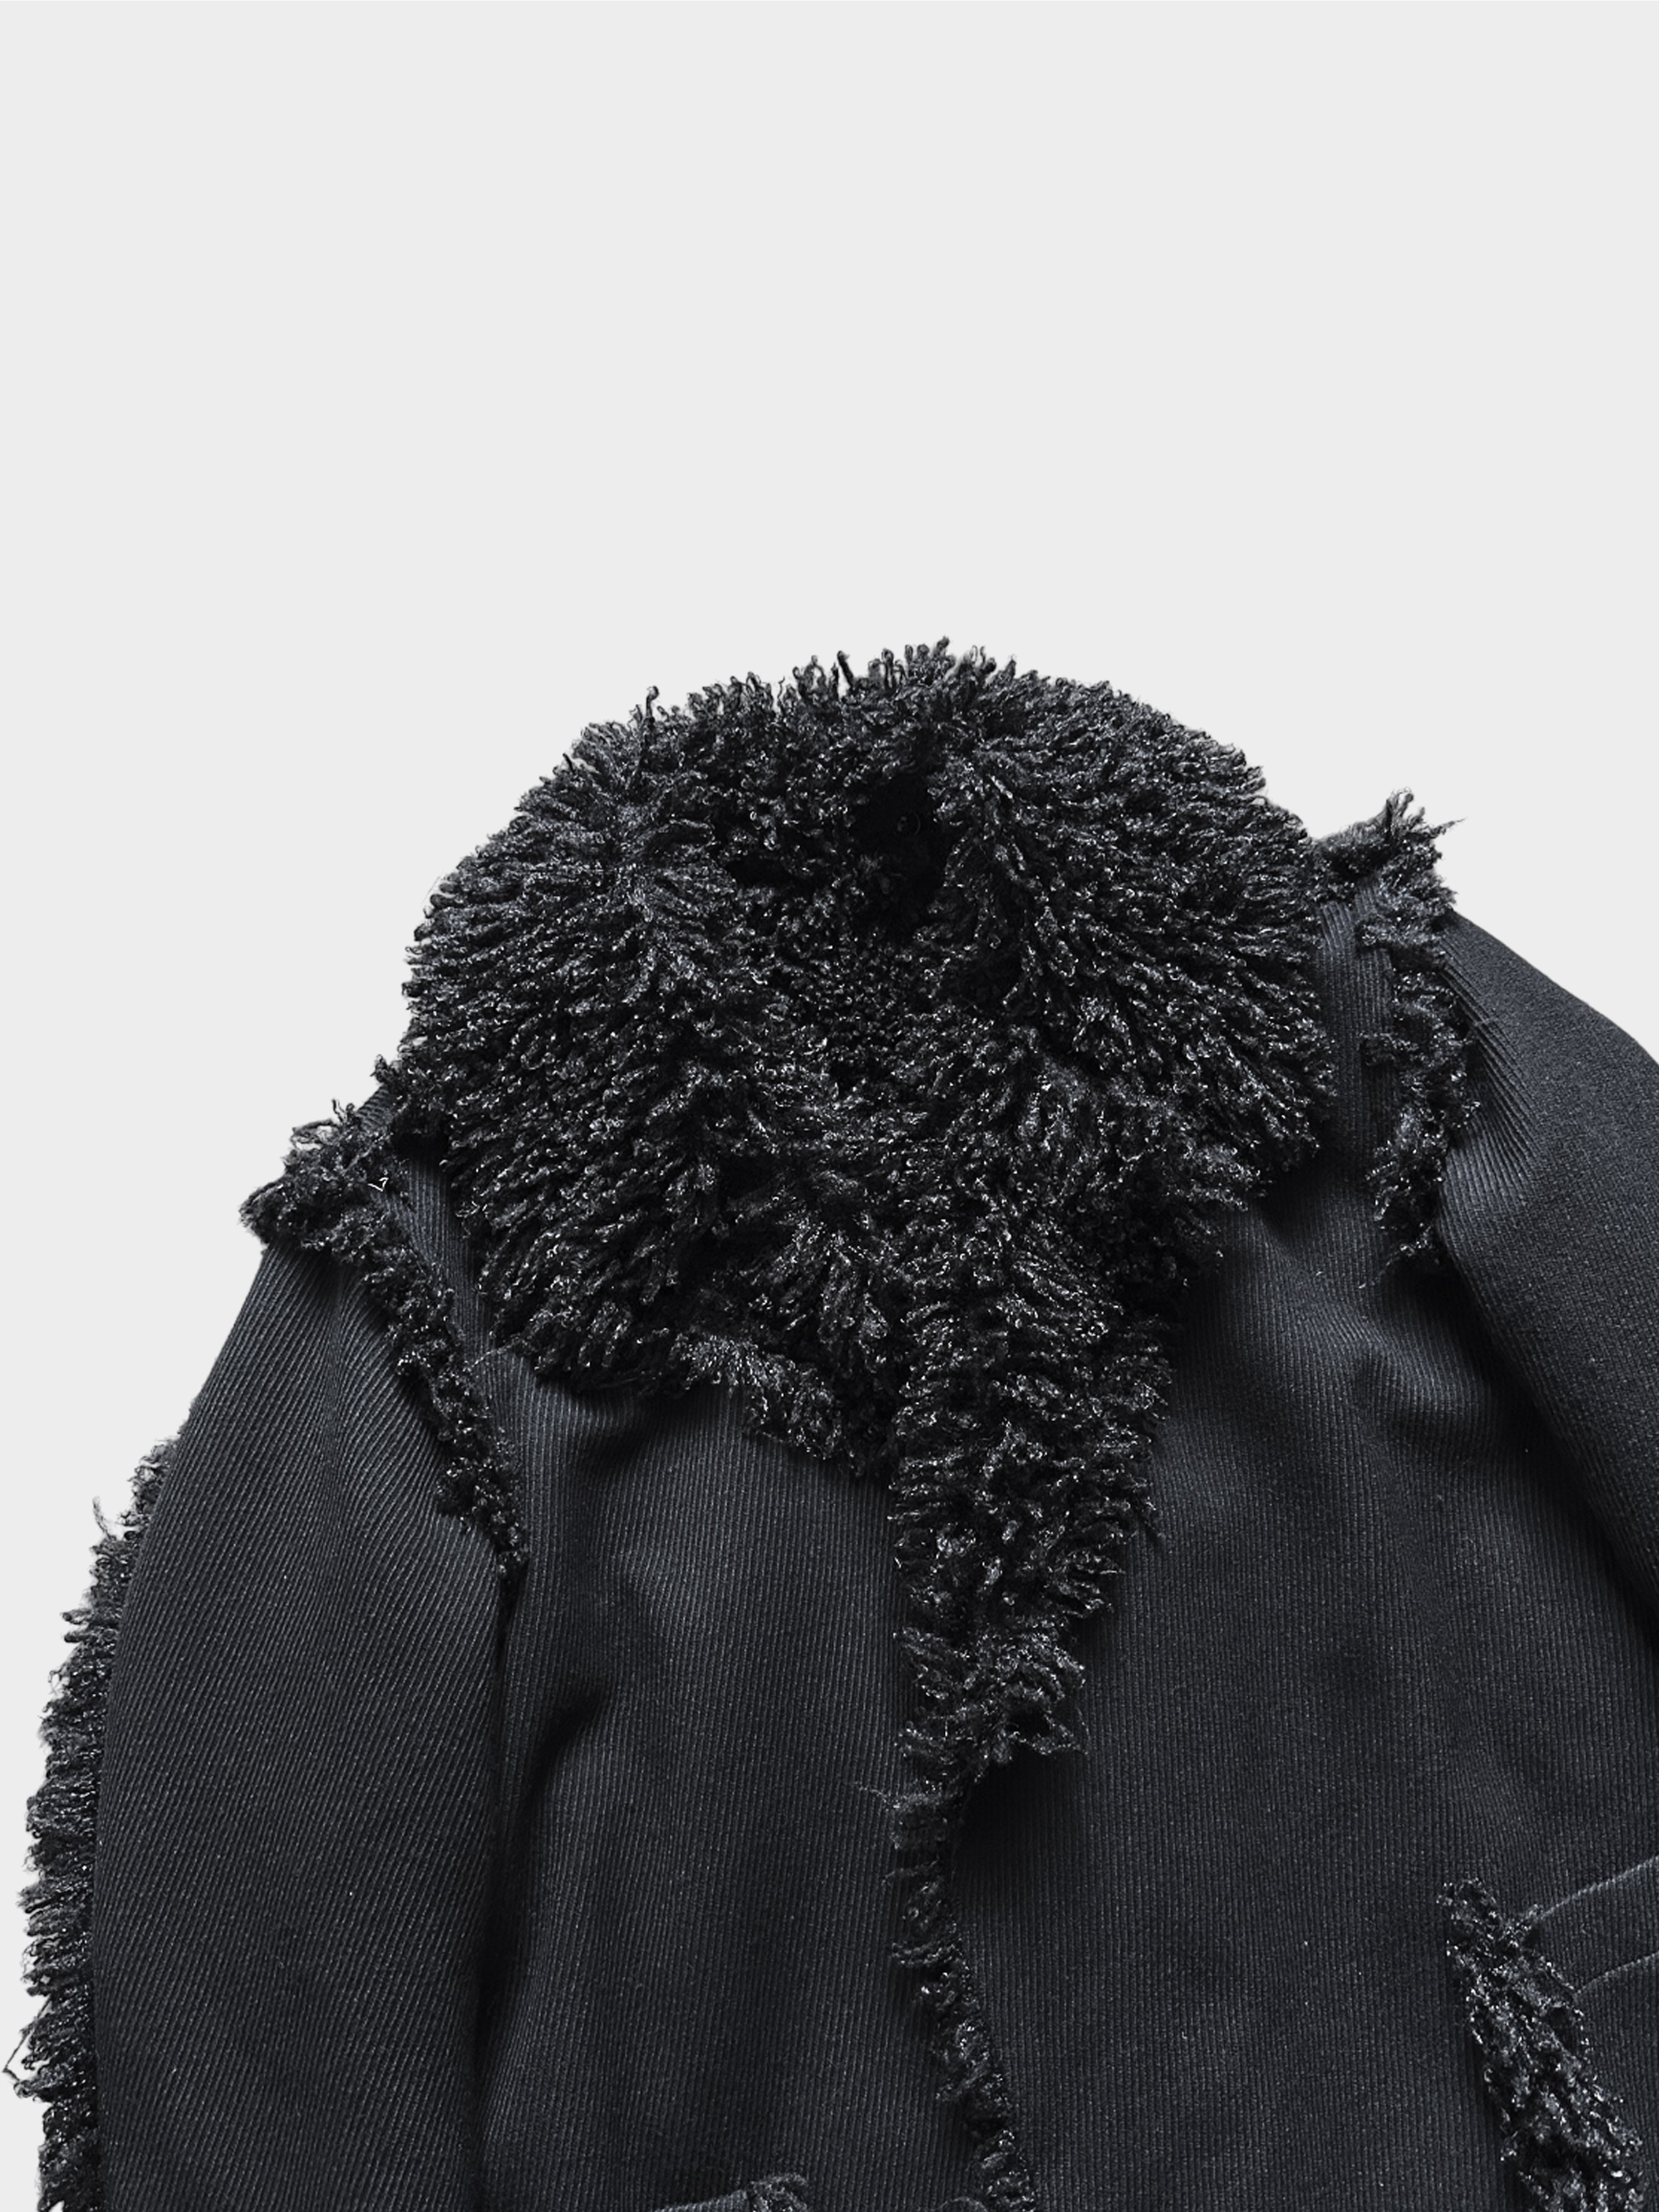 Yohji Yamamoto FW 2013 Pour Homme Black Loop Fur Coat